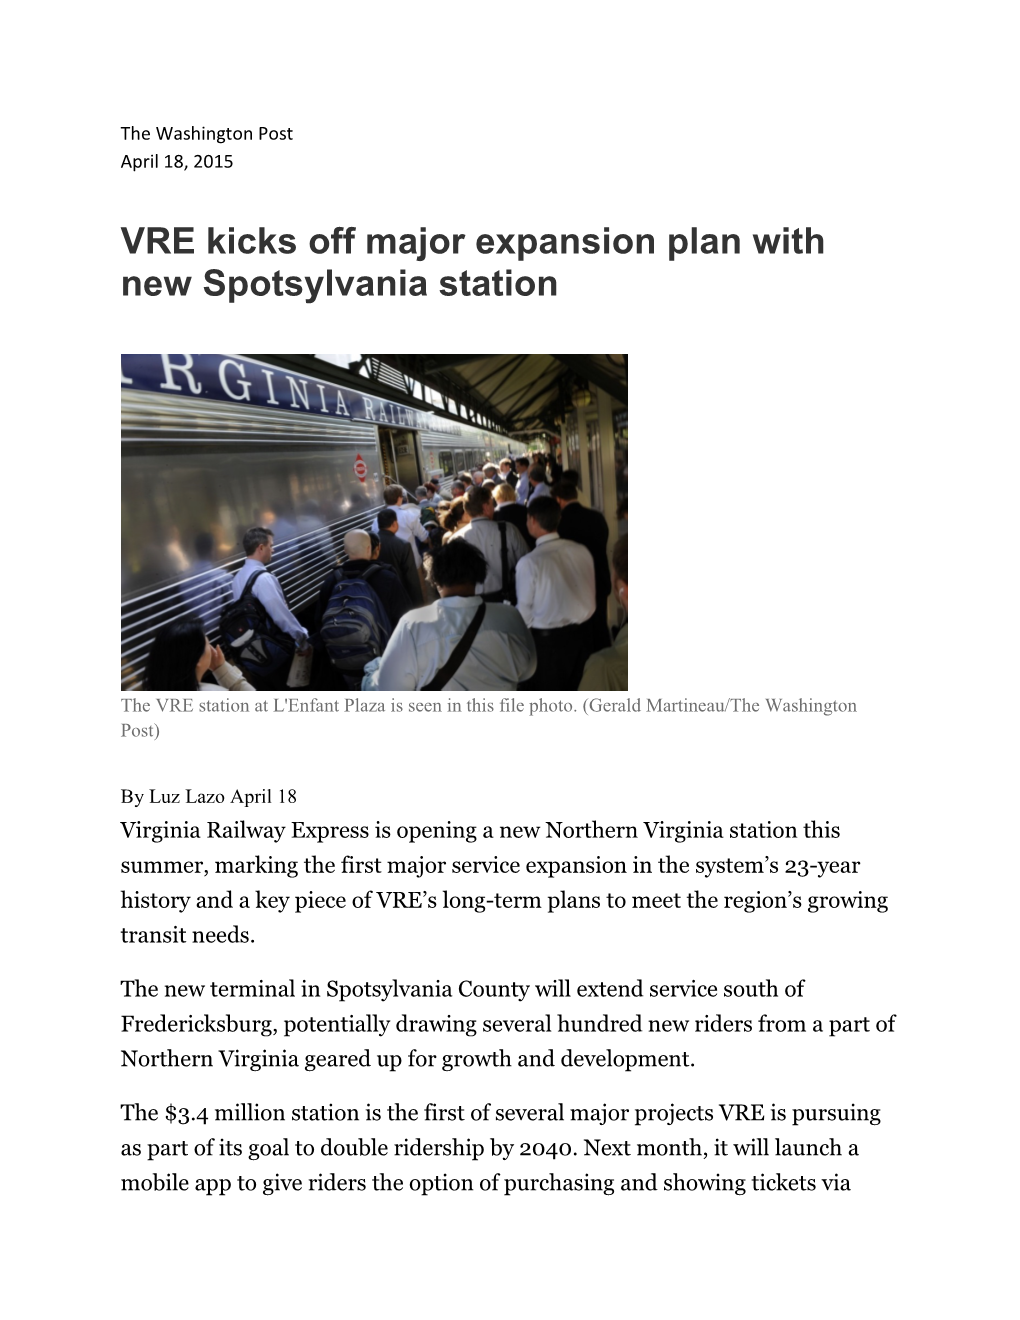 VRE Kicks Off Major Expansion Plan with New Spotsylvania Station